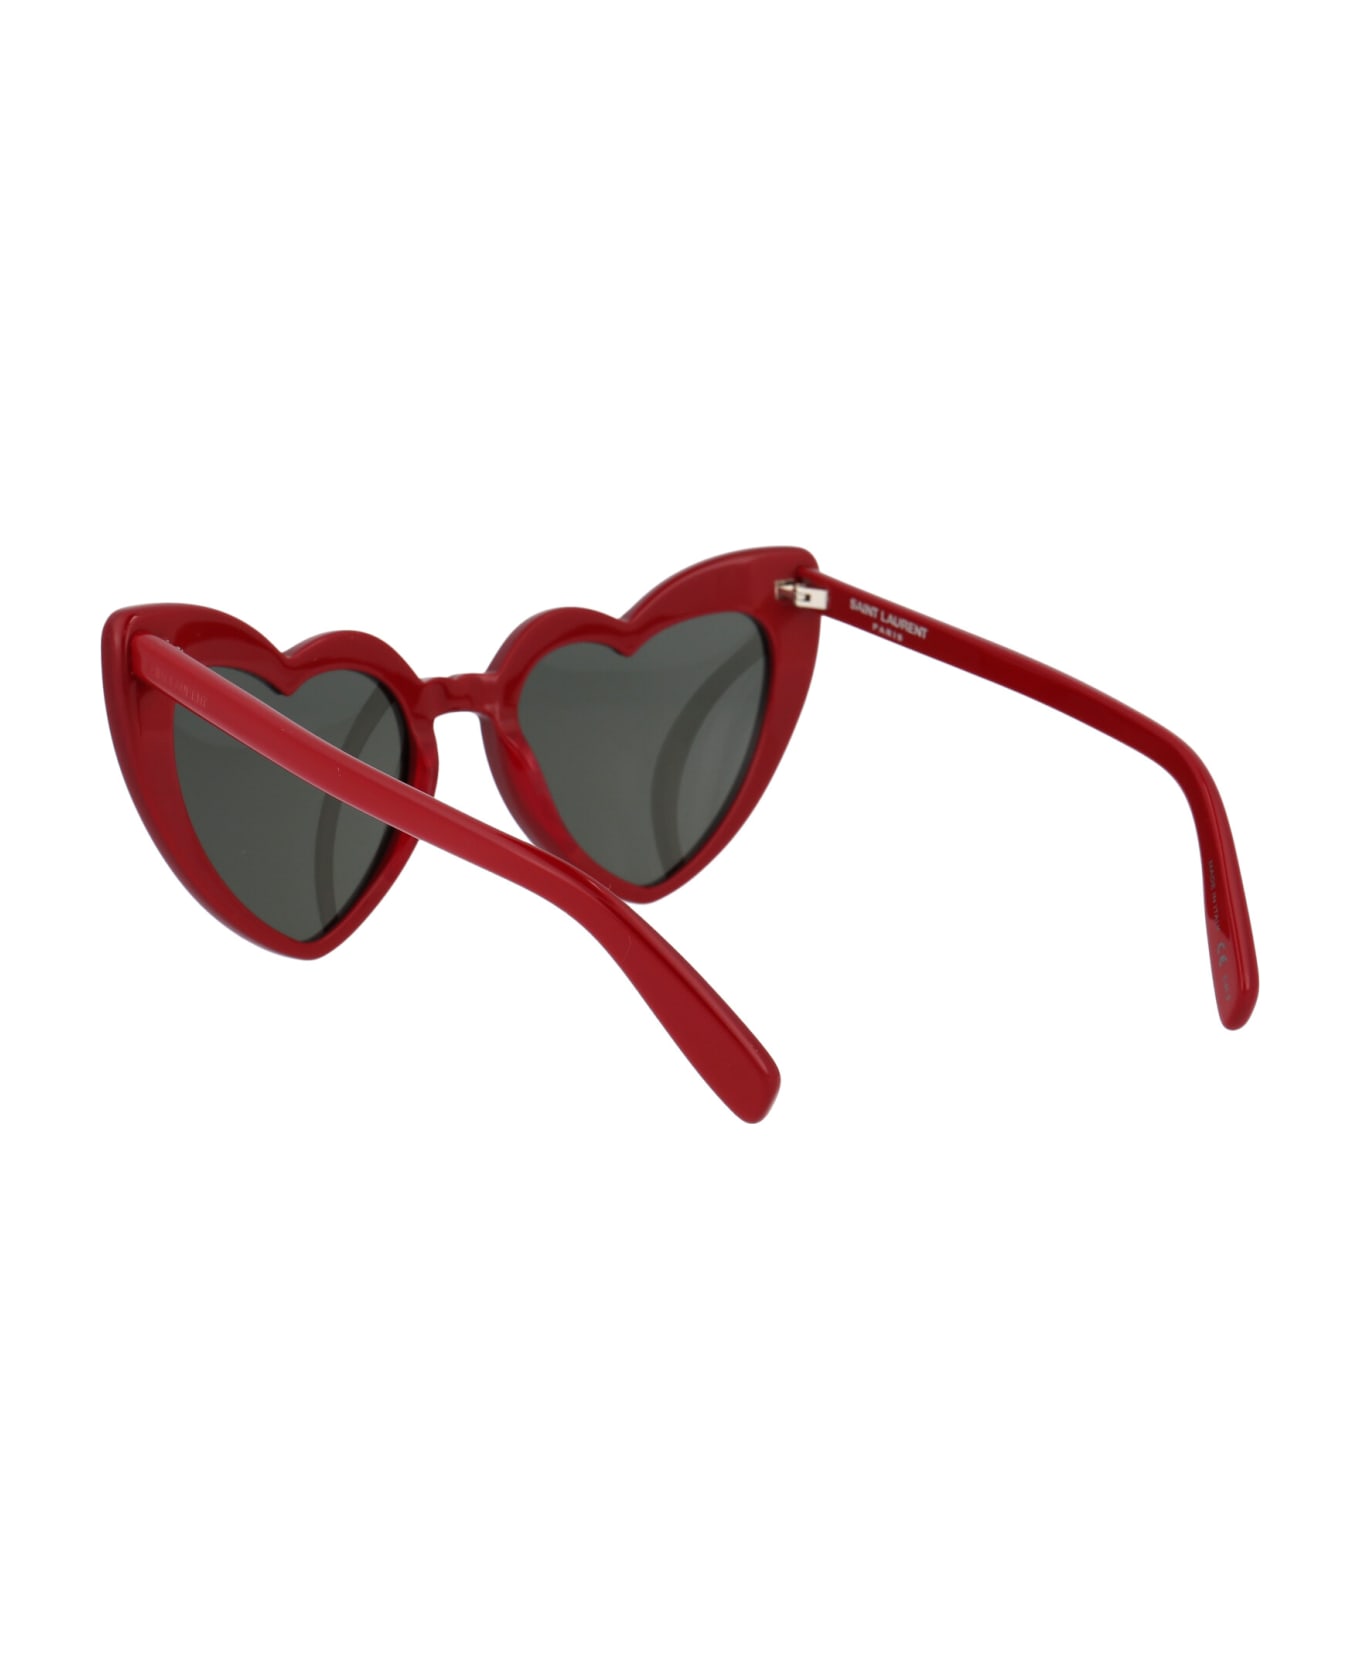 Saint Laurent Eyewear Sl 181 Loulou Sunglasses - 002 RED RED GREY